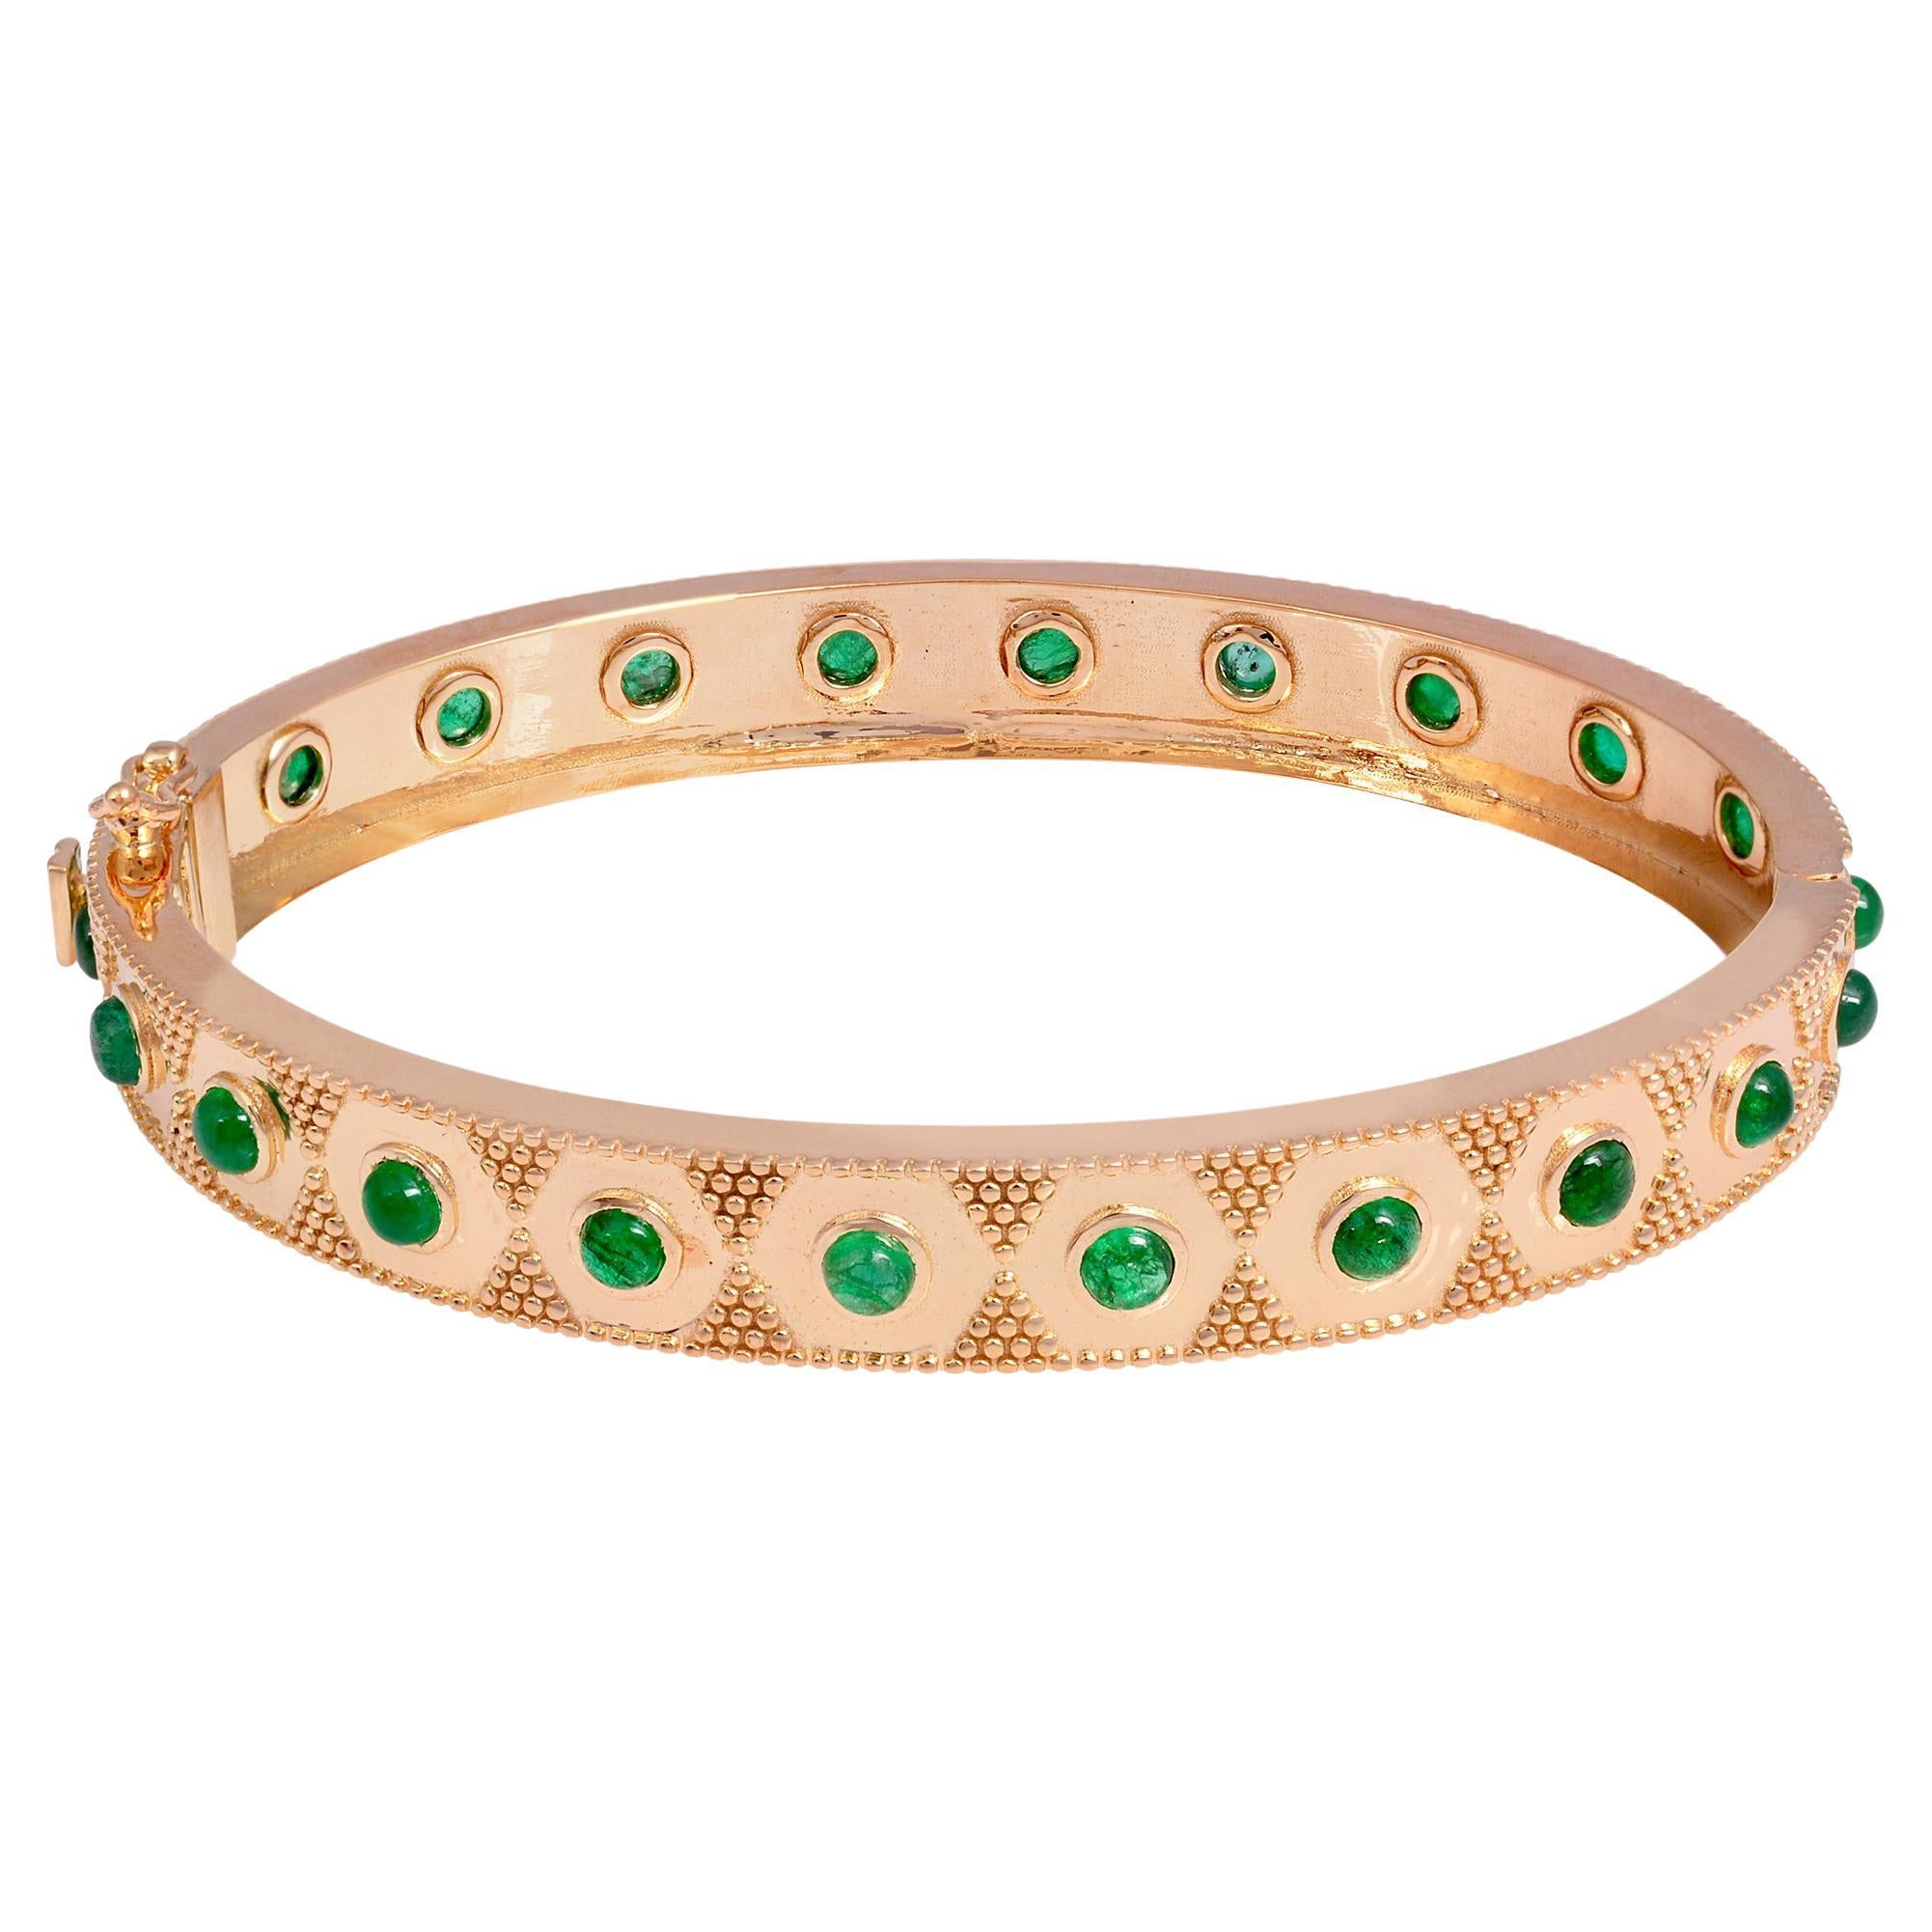 3.10 Carat Zambian Emerald Gemstone Bangle Bracelet 18 Karat Rose Gold Jewelry